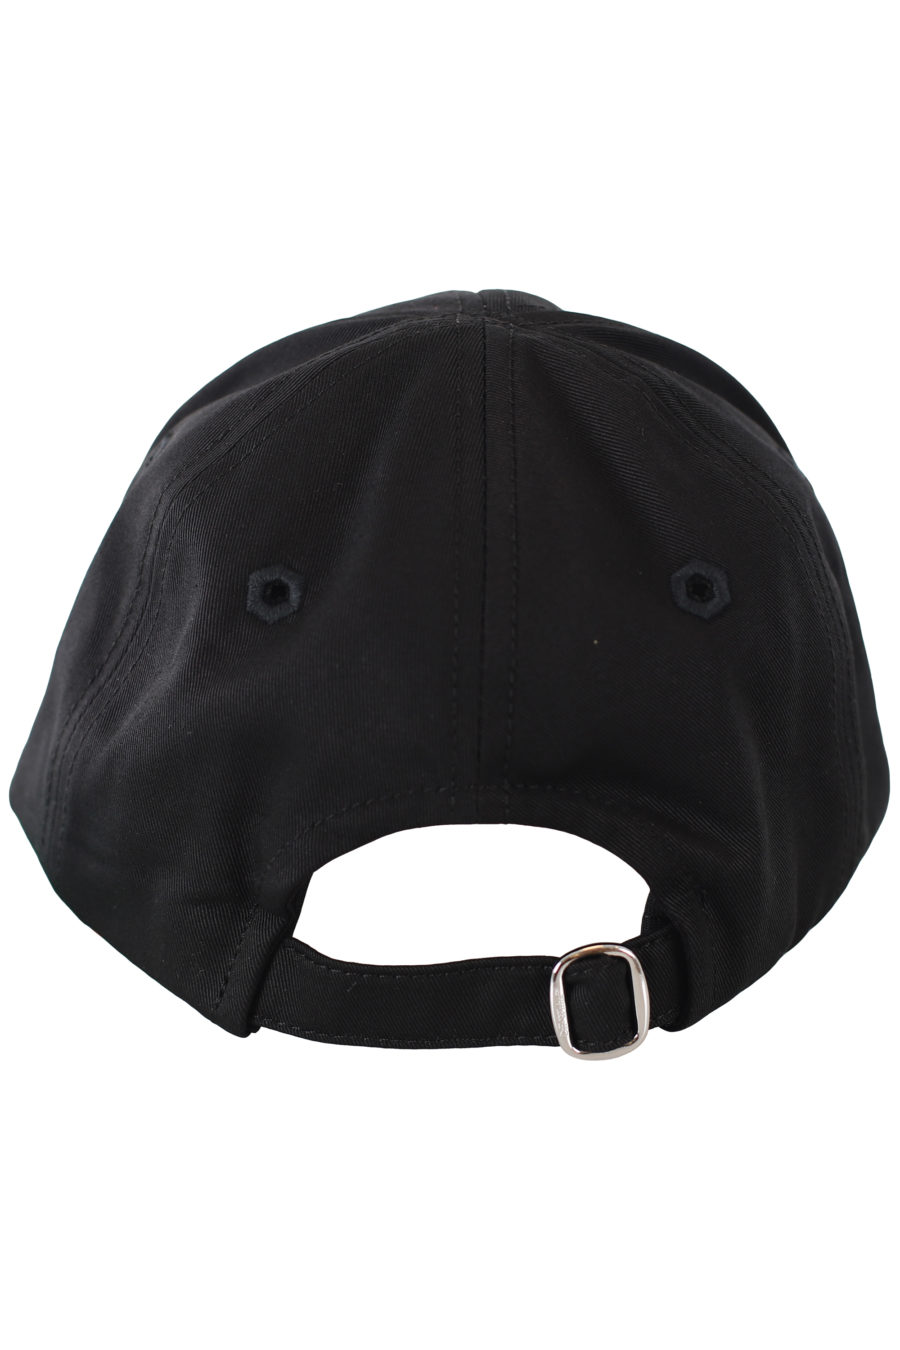 Gorra negra con flechas bordadas - IMG 9393